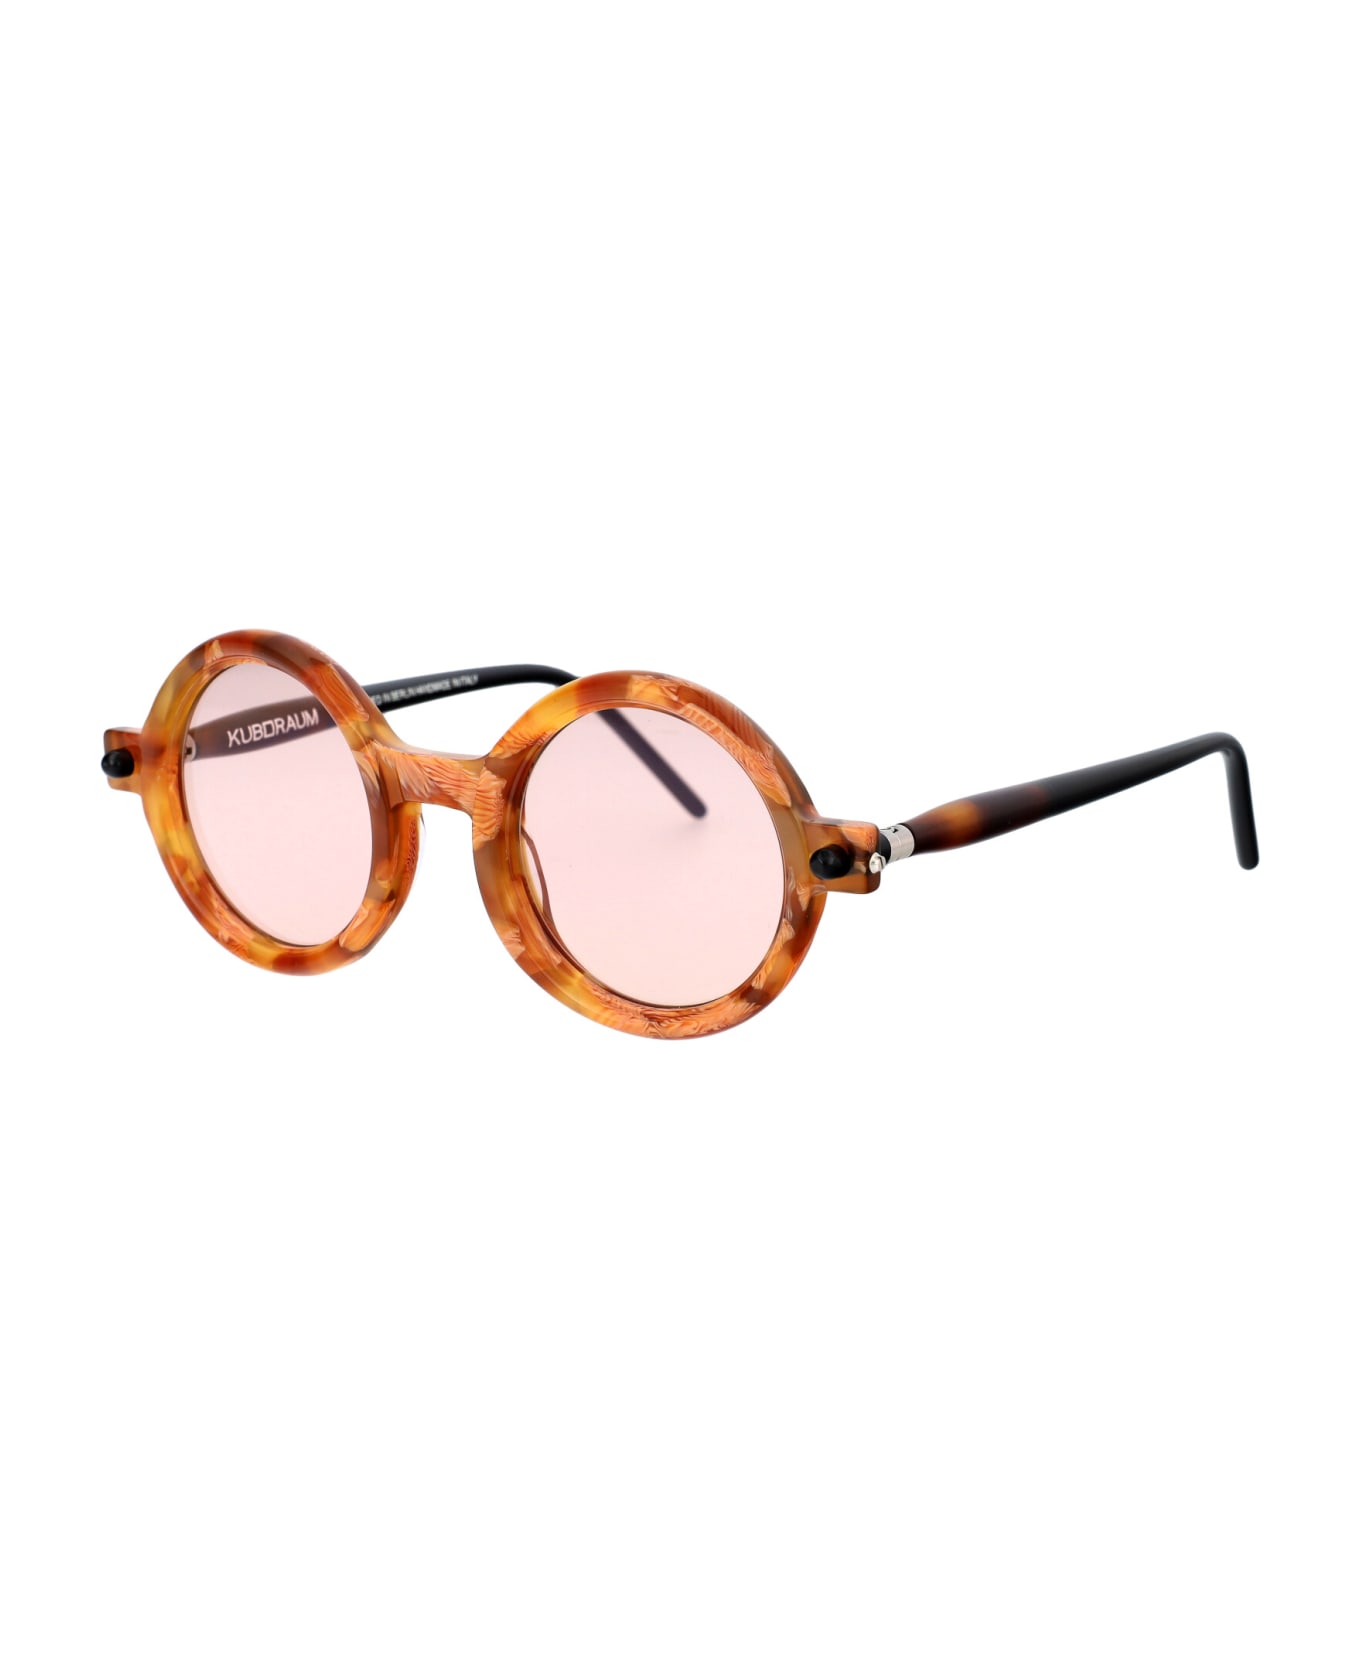 Kuboraum Maske P1 Sunglasses - APA pink1*